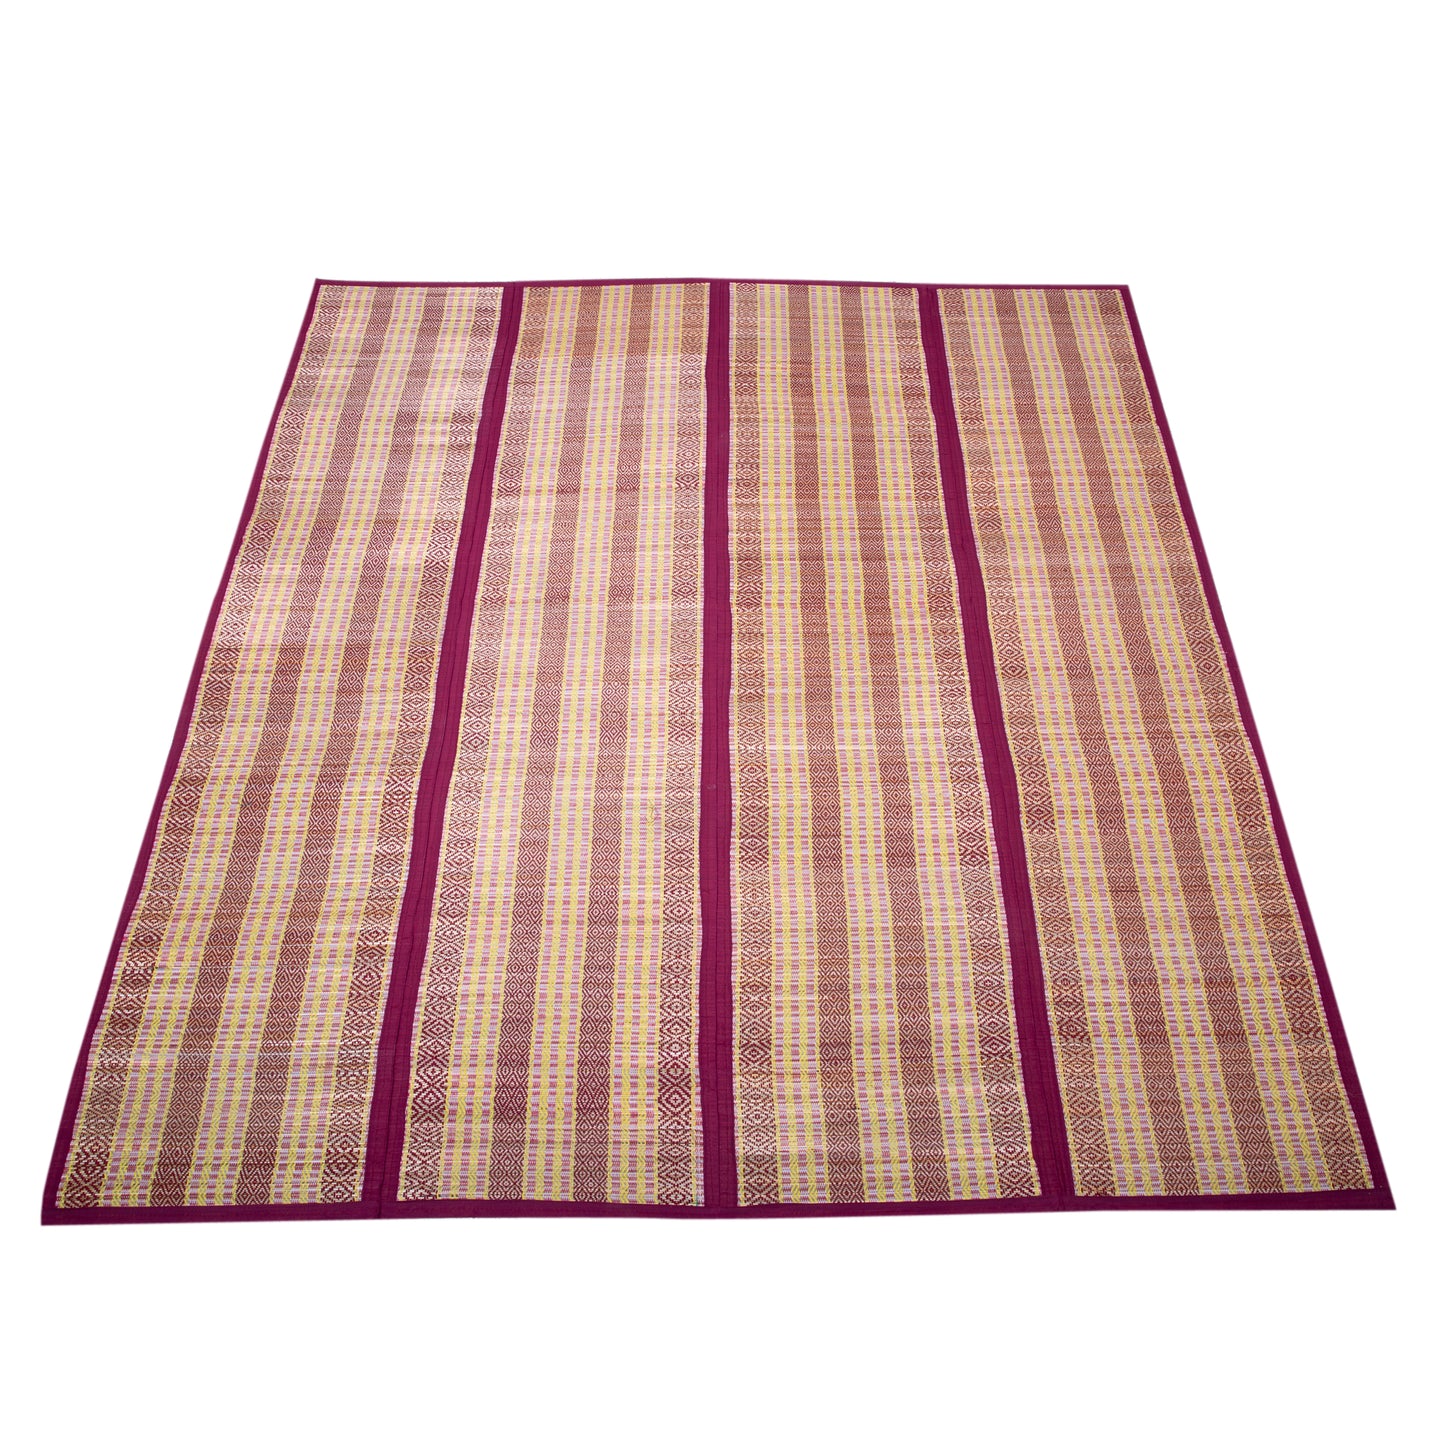 Designer Organic Chatai Mat Foldable made of Madurkathi Grass for Sleeping, Sitting on Floor - T3-37